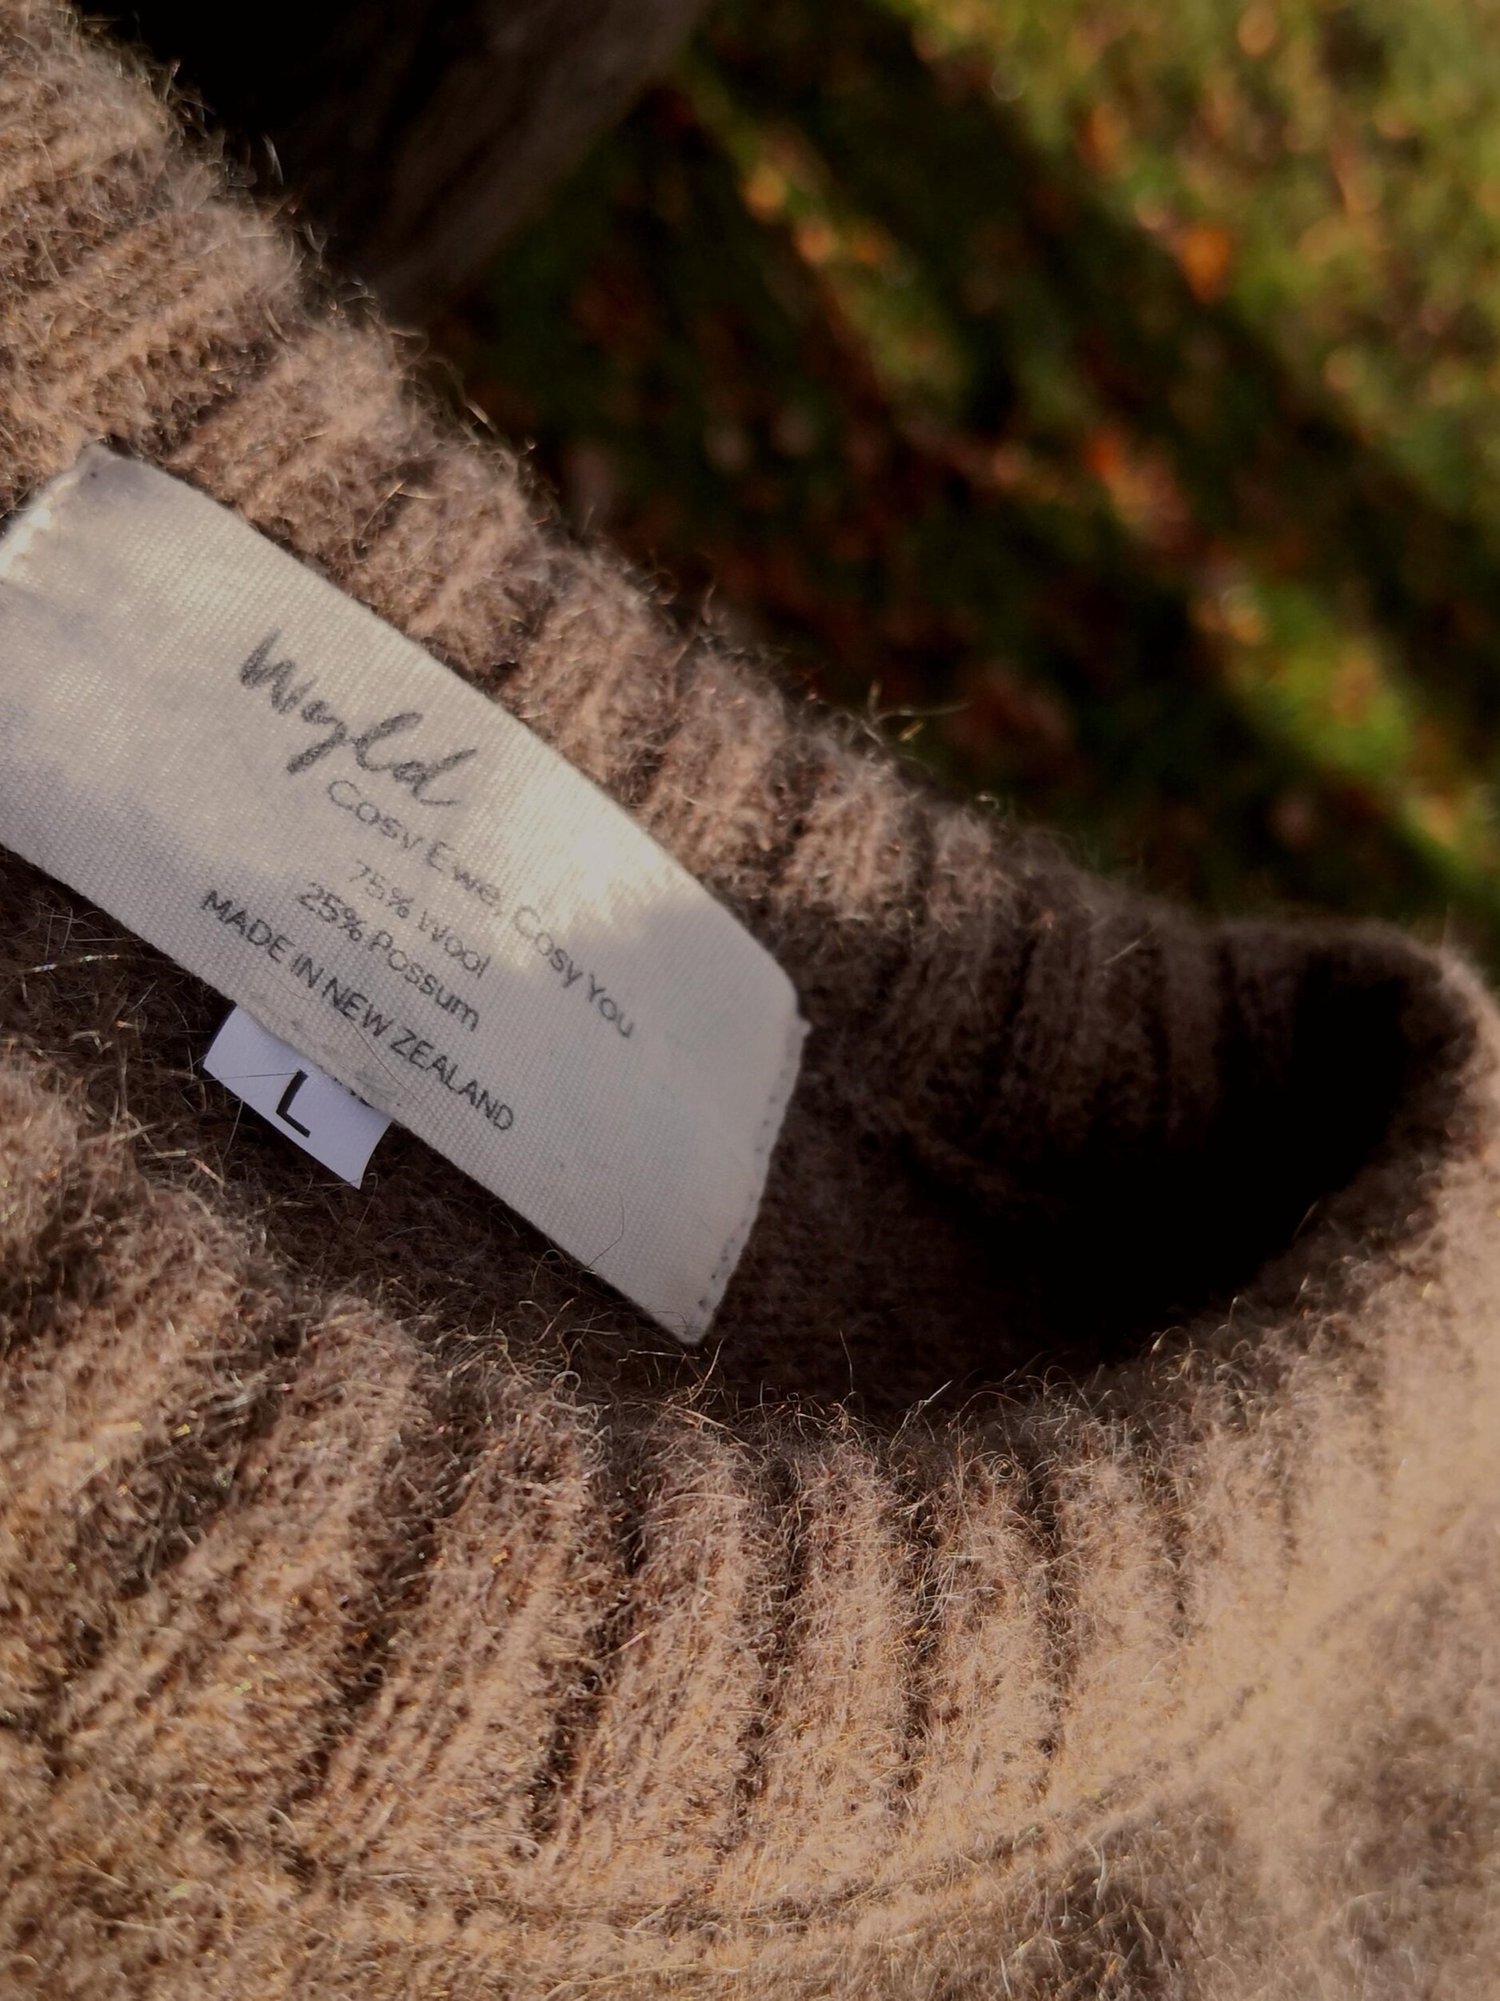 NZ Made Wyld Wool Possum Boot Socks: The cosiest socks you've ever worn —  Wyld